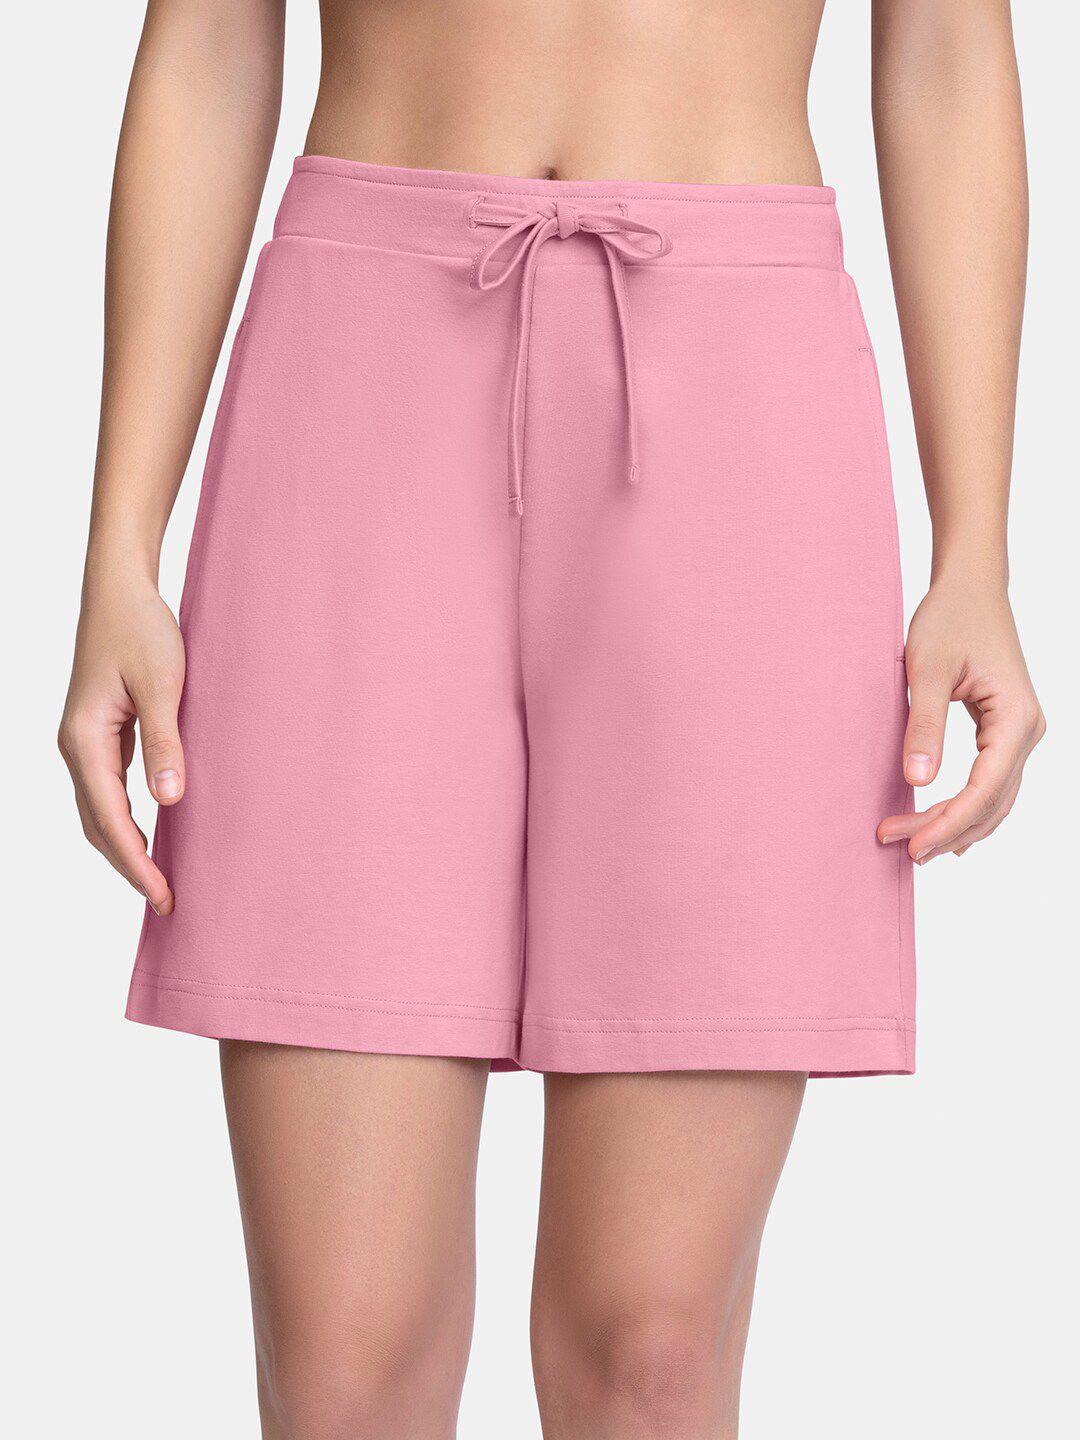 amante-women-pink-lounge-shorts